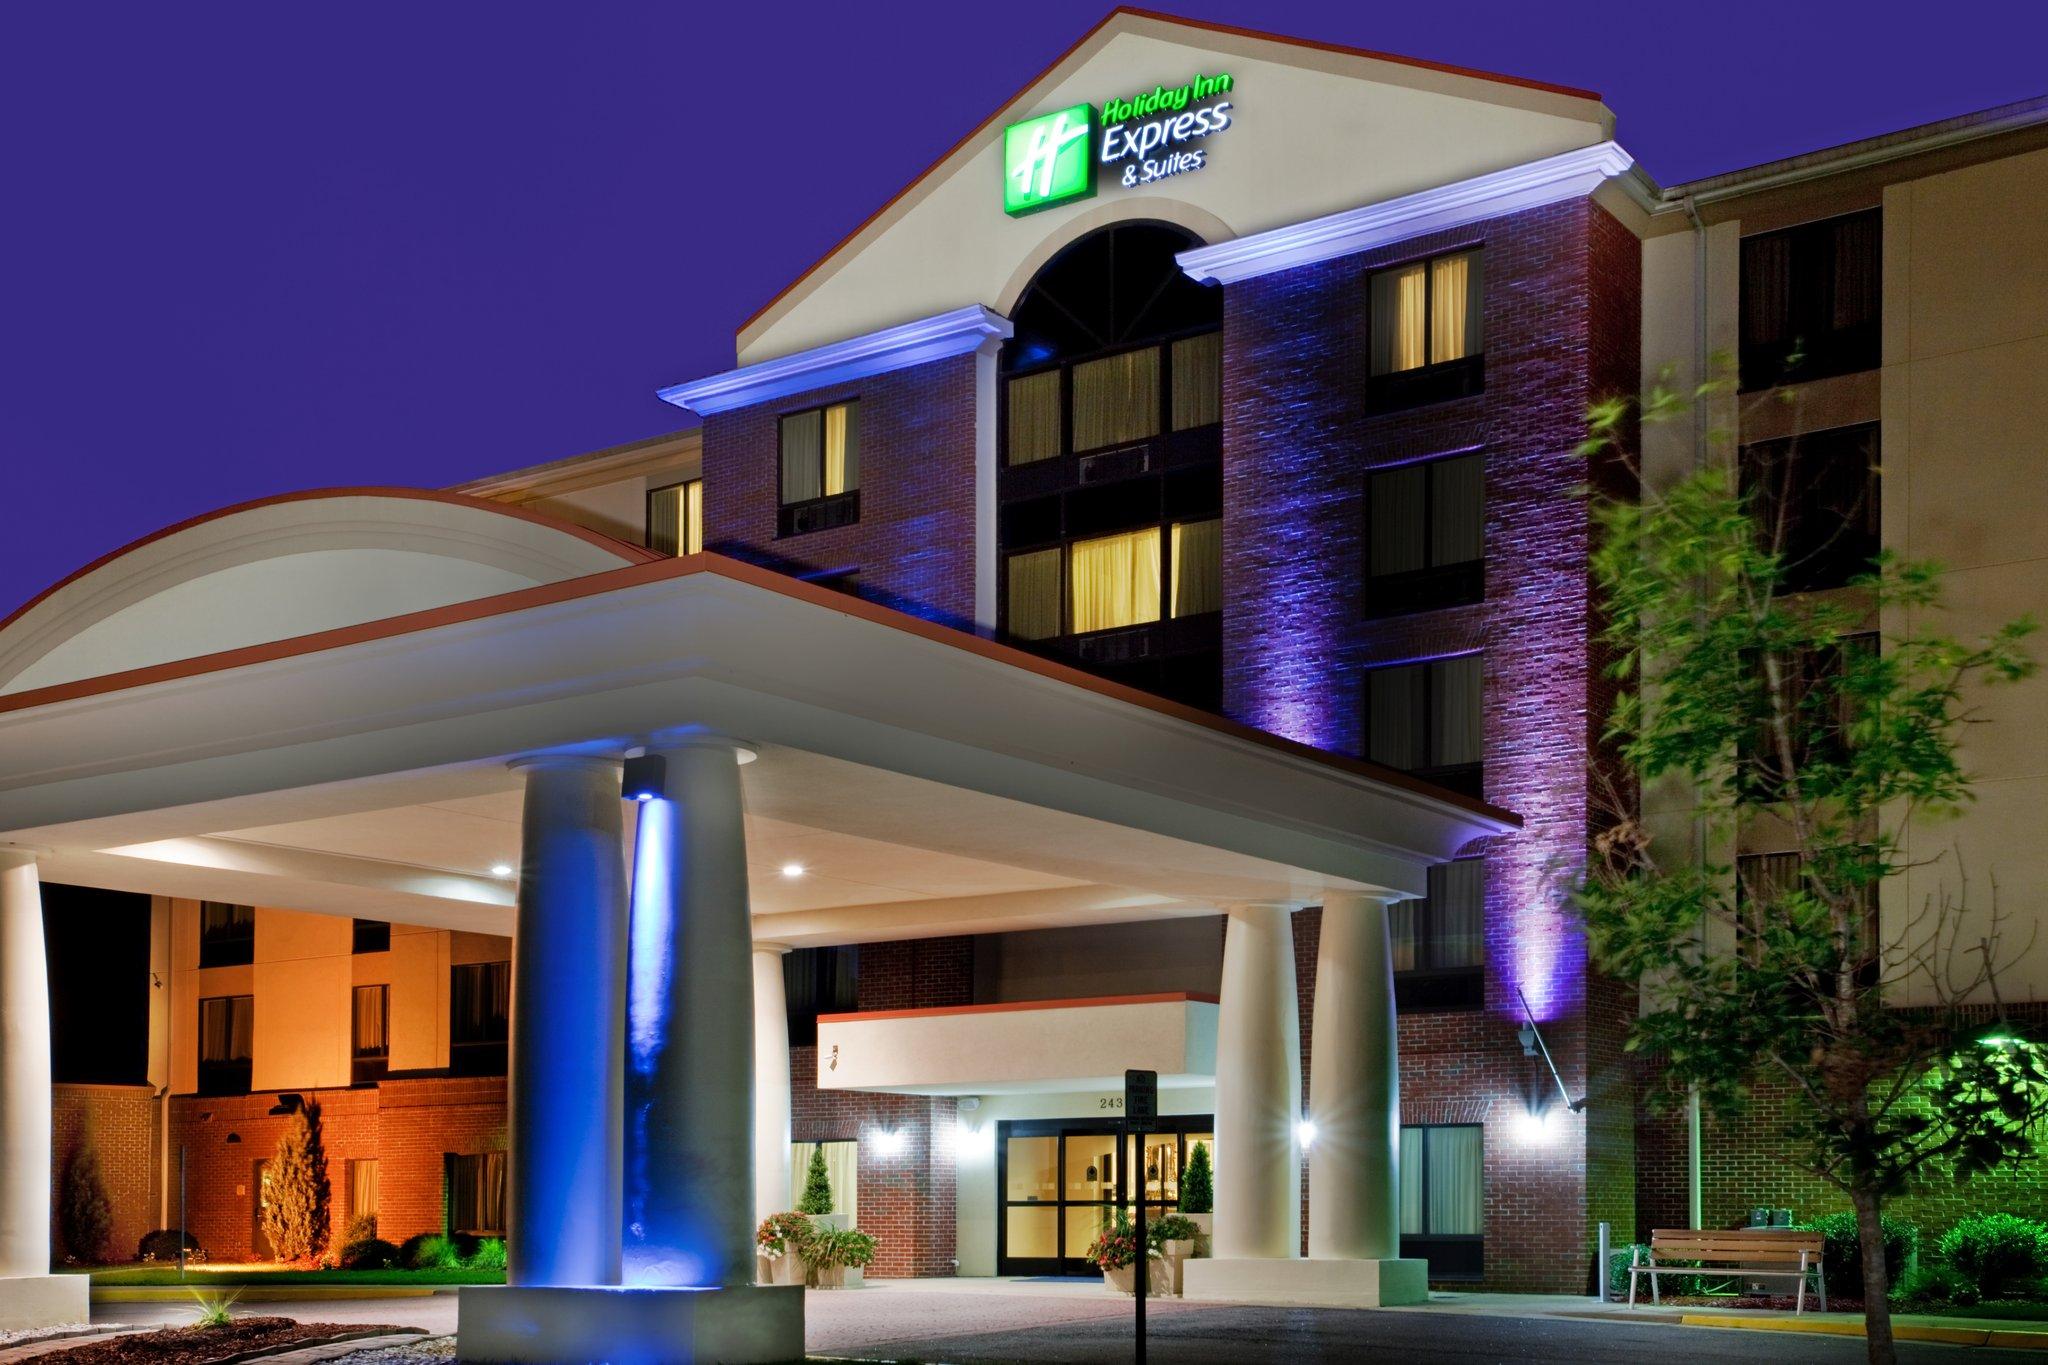 Holiday Inn Express Hotel & Suites Chesapeake in Chesapeake, VA